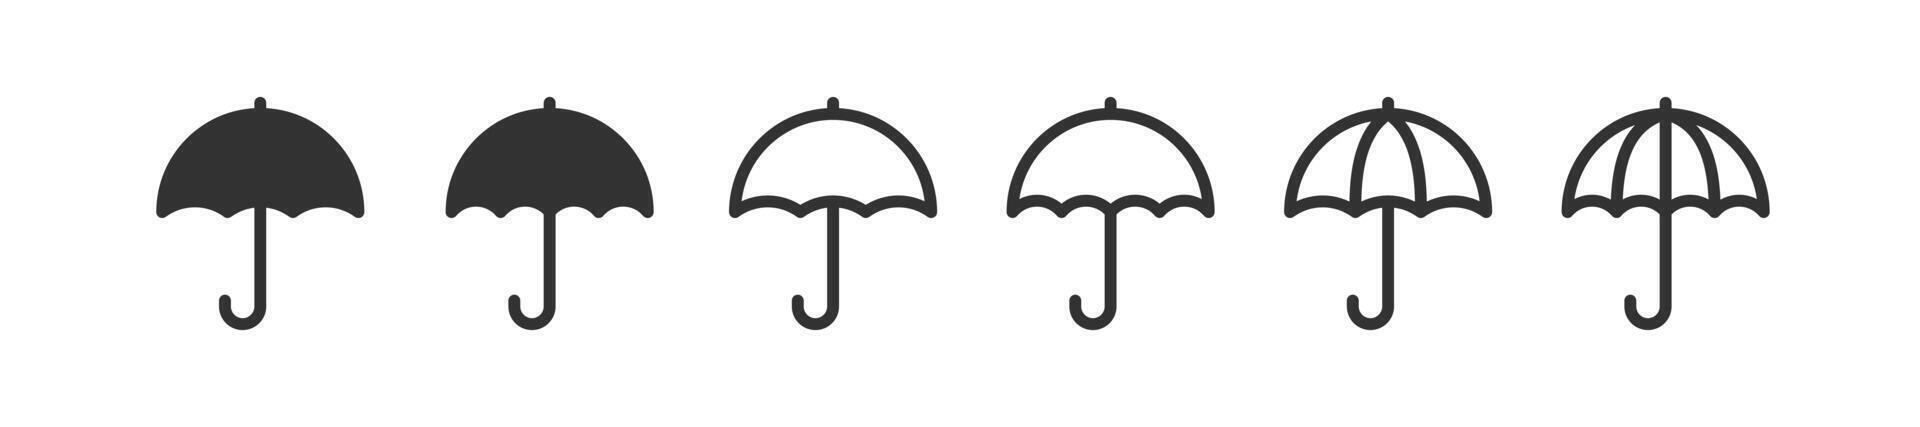 paraguas icono. lluvia clima signo. gota de agua proteger. temporada sombrilla elemento. agua proteger. vector ilustración.